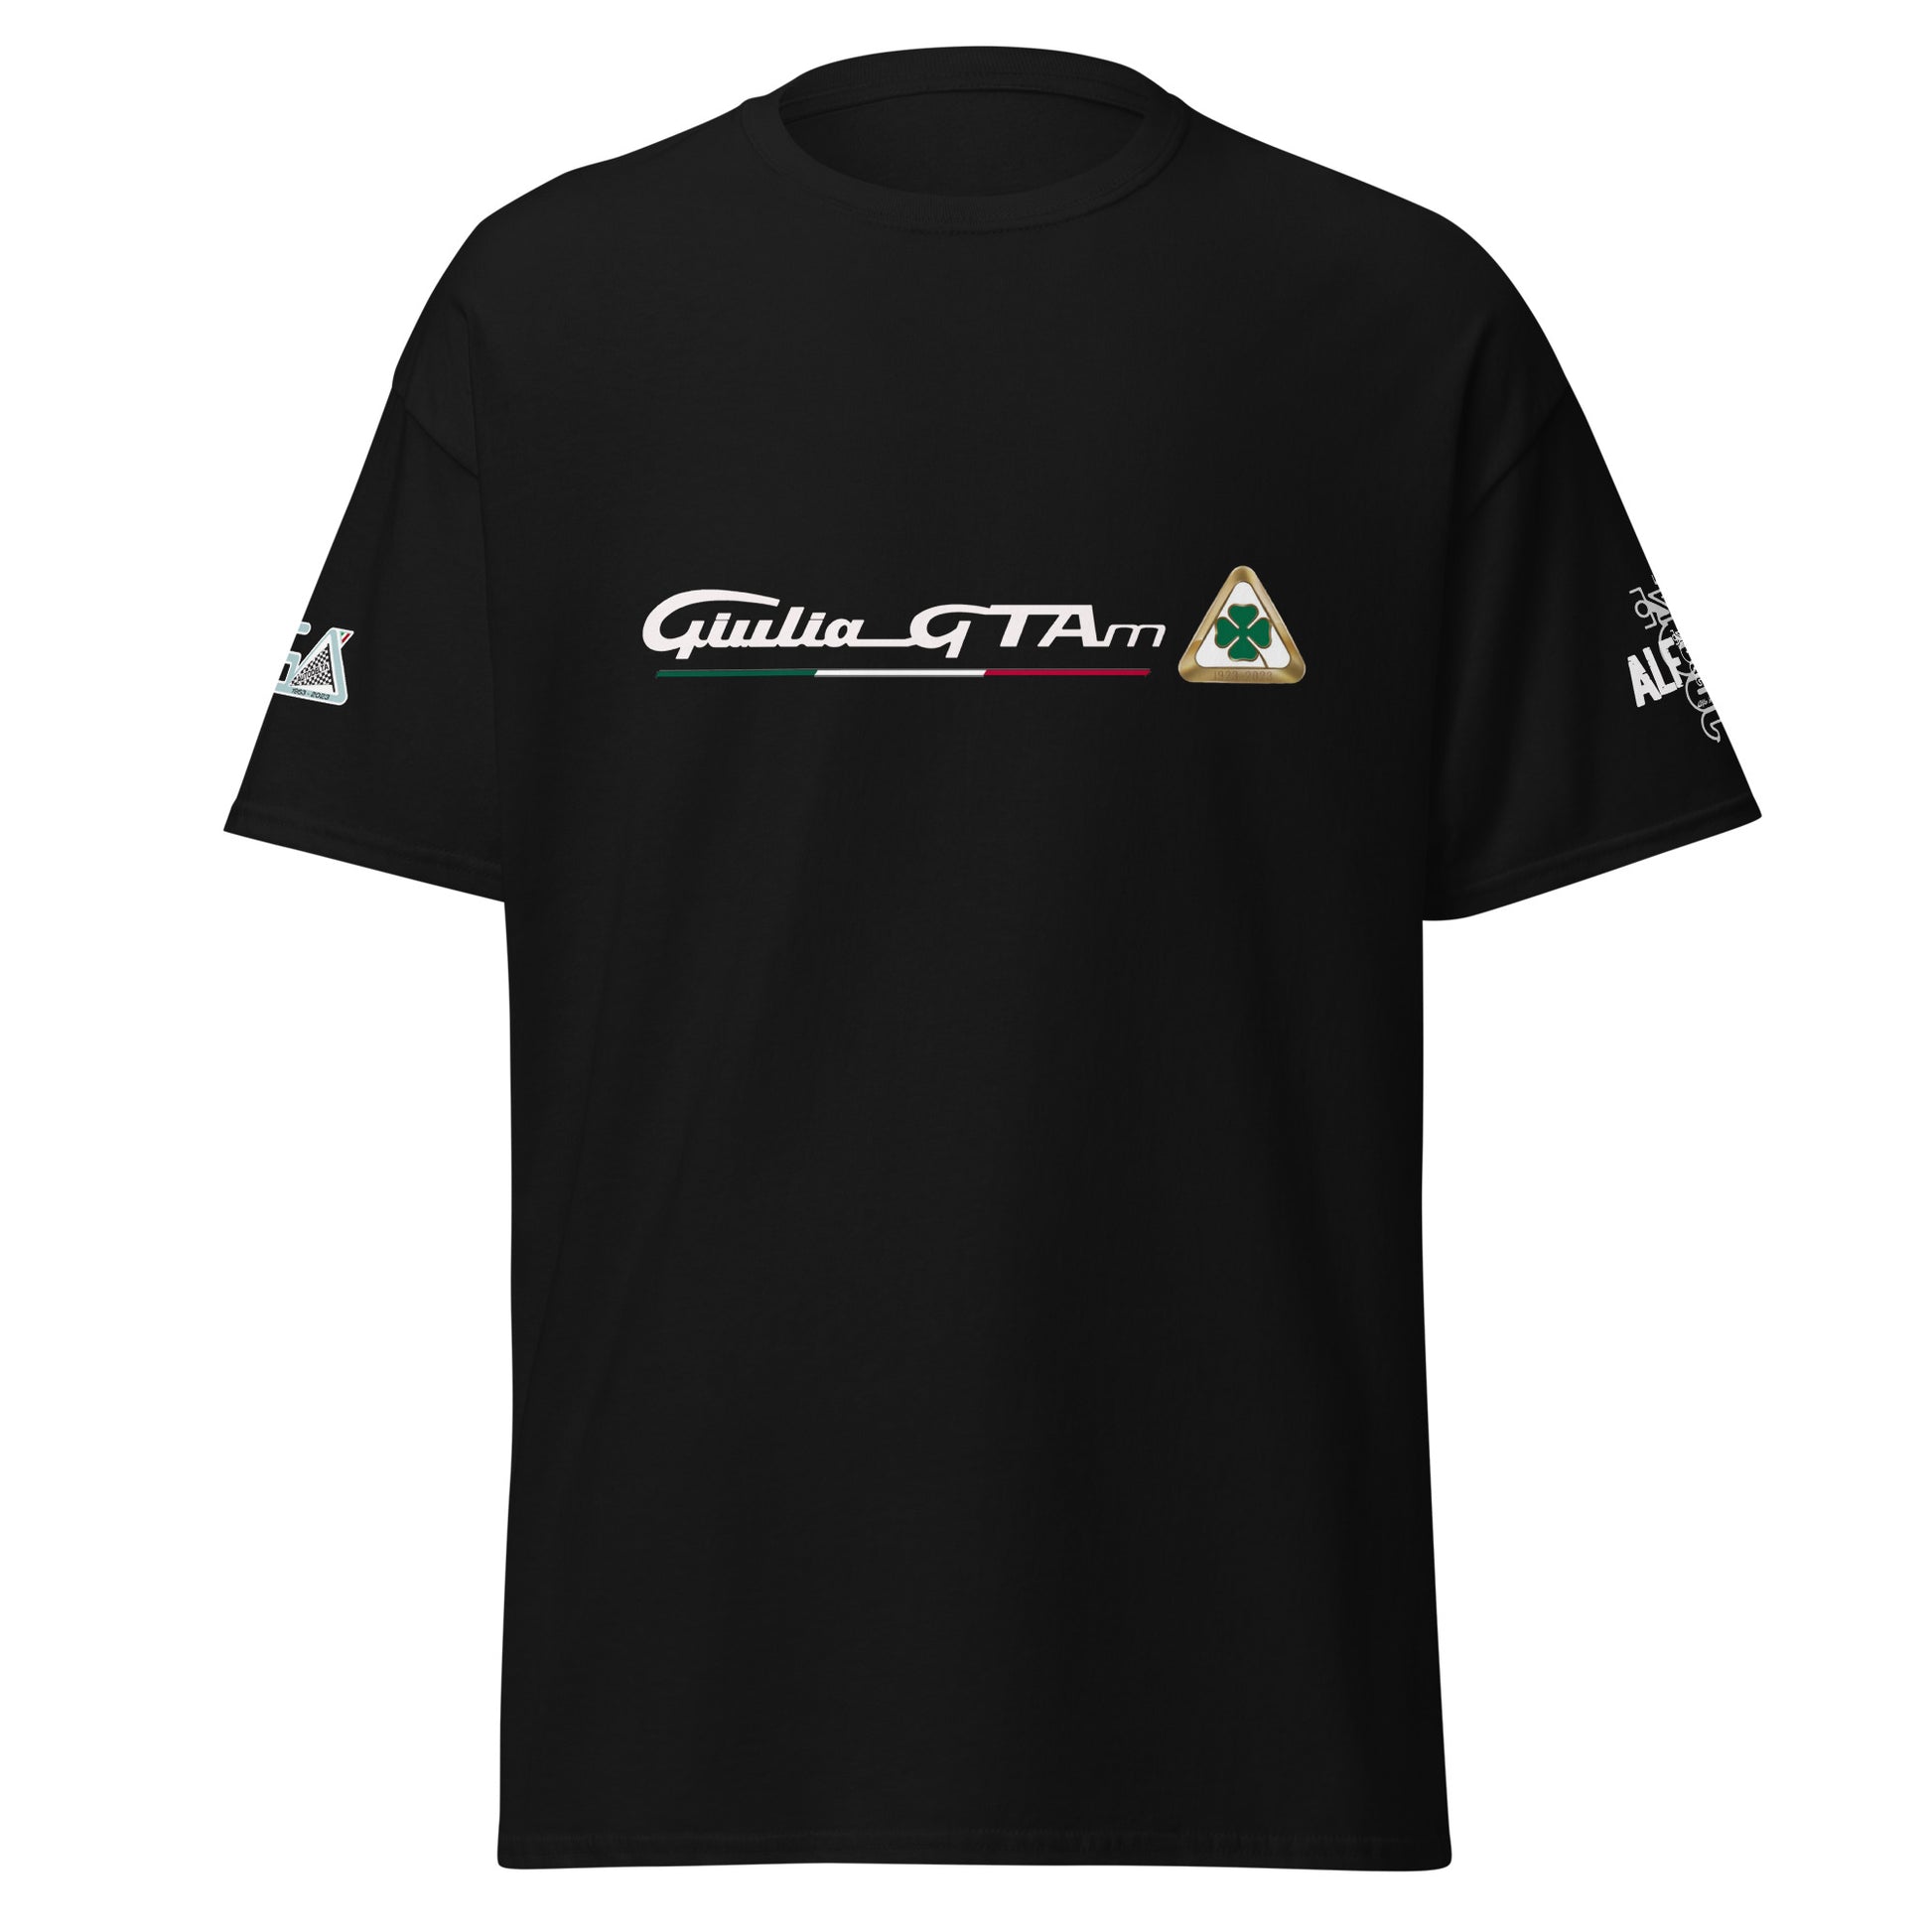 T-shirt Alfa Romeo Giulia Gtam logo quadrifoglio Autodelta